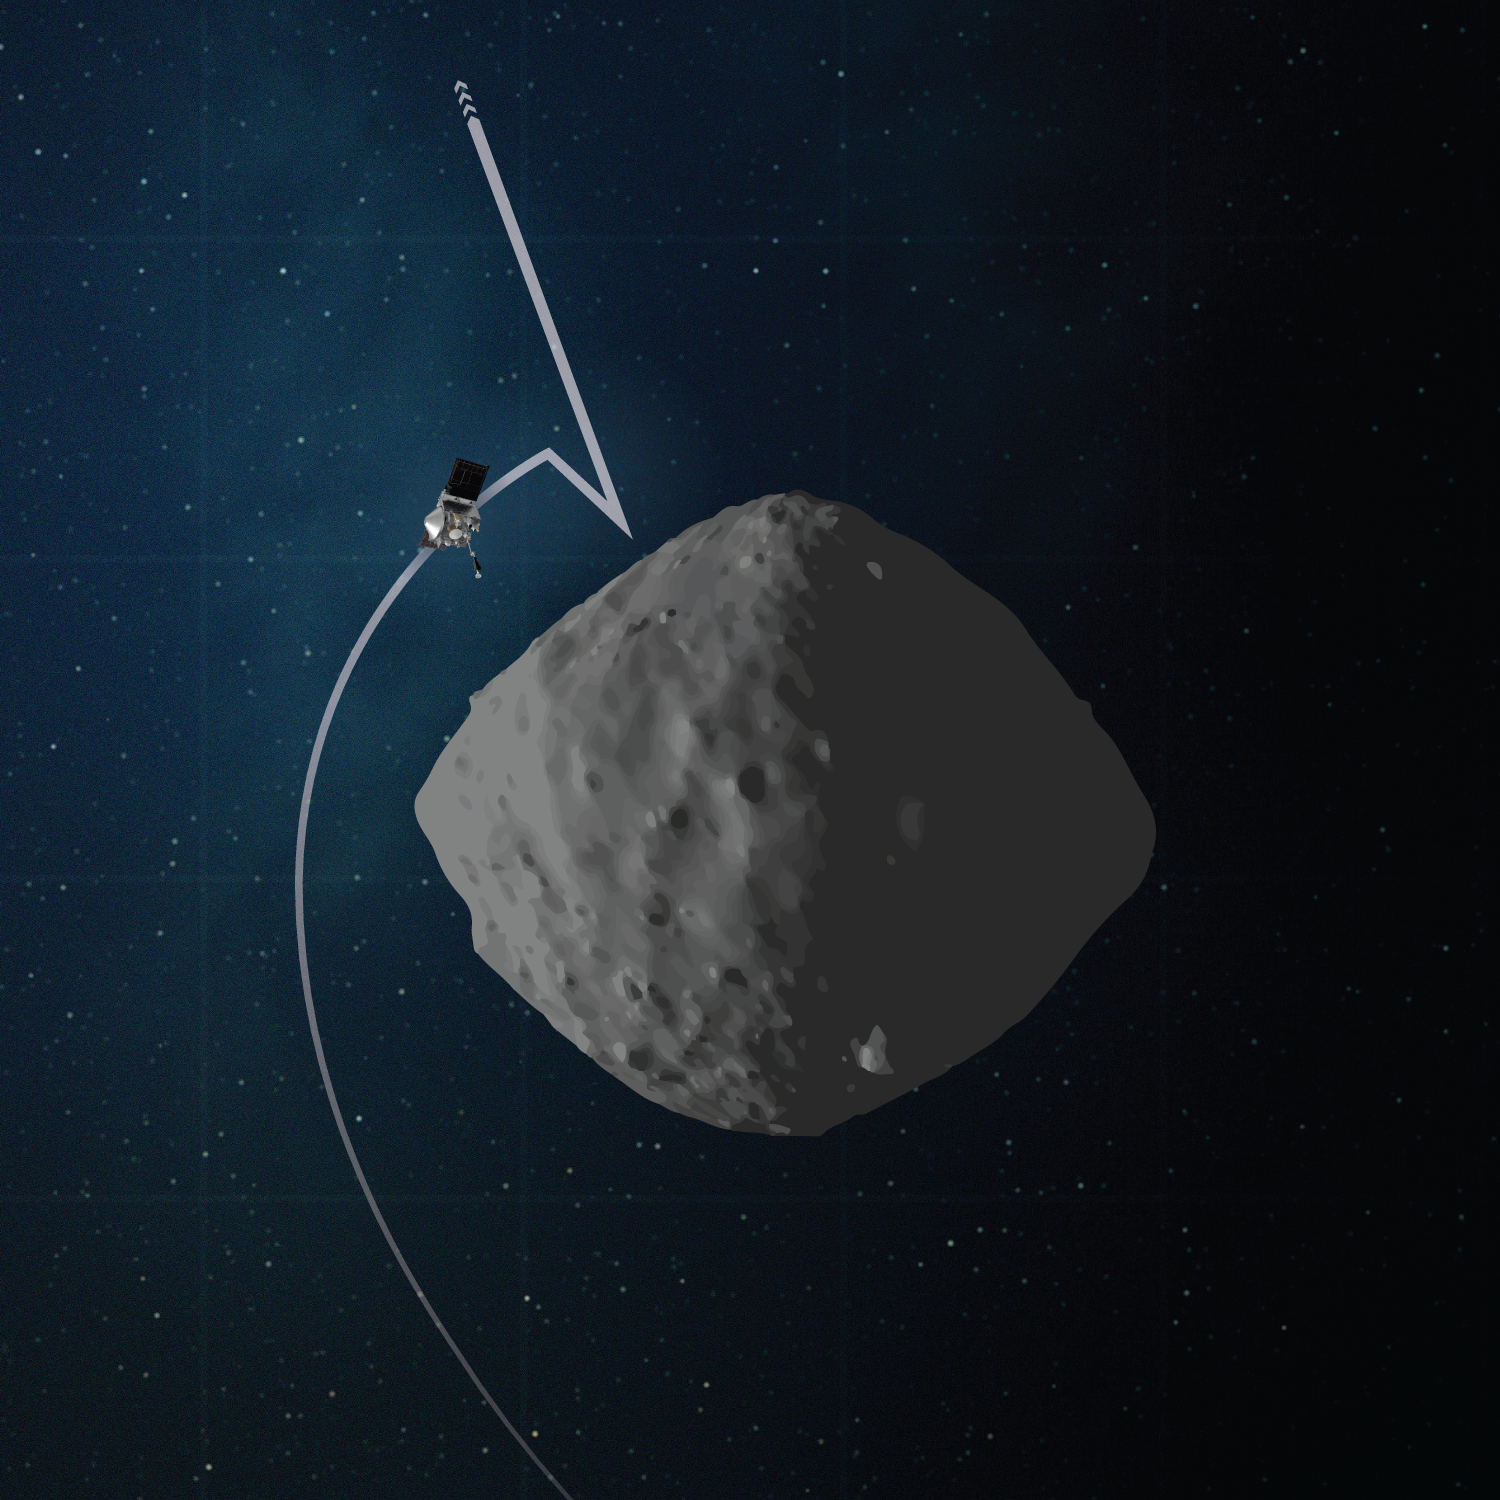 NASA's OSIRIS-REx spacecraft